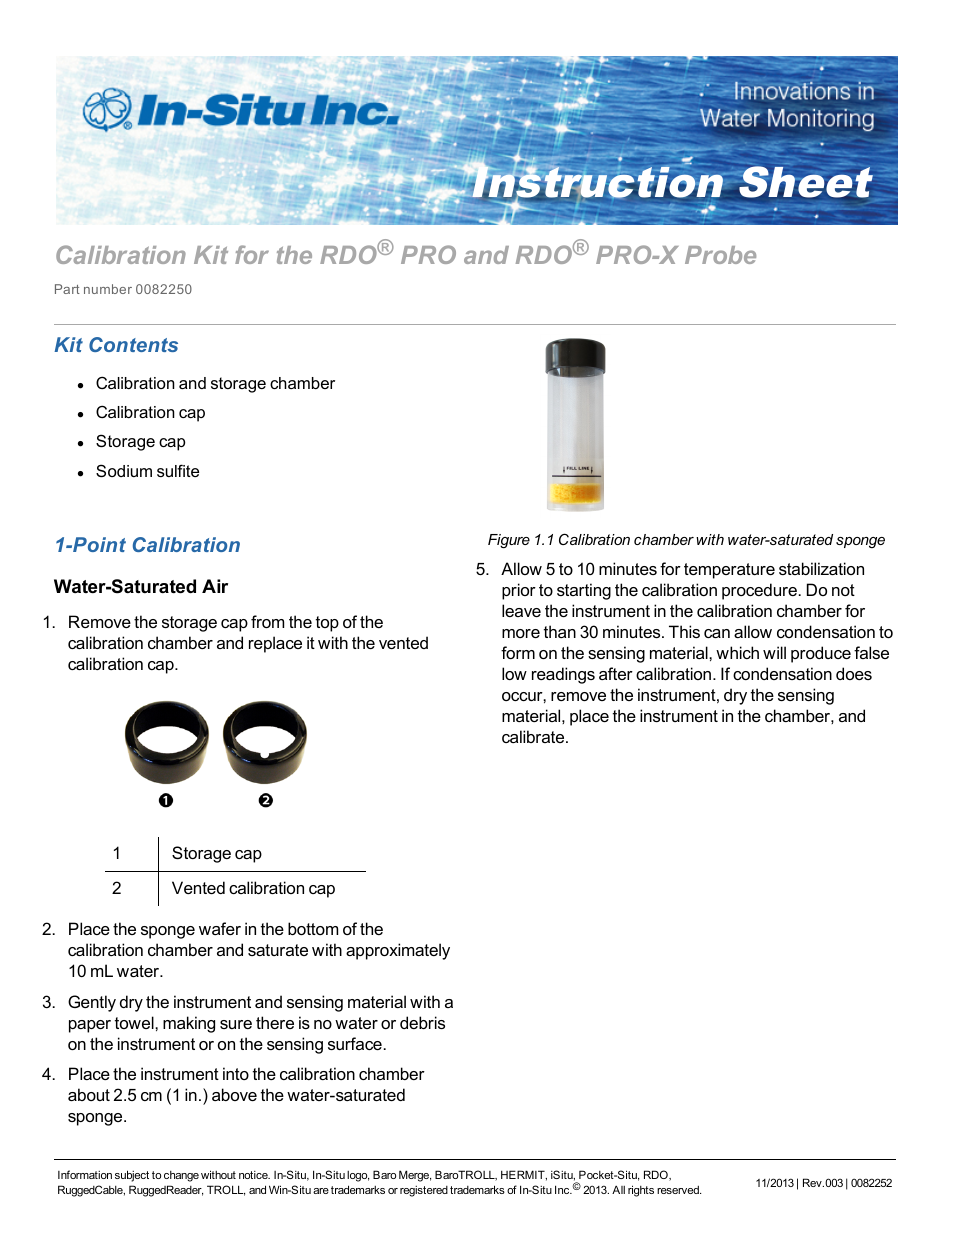 Calibration Kit for the optical RDO PRO Probe